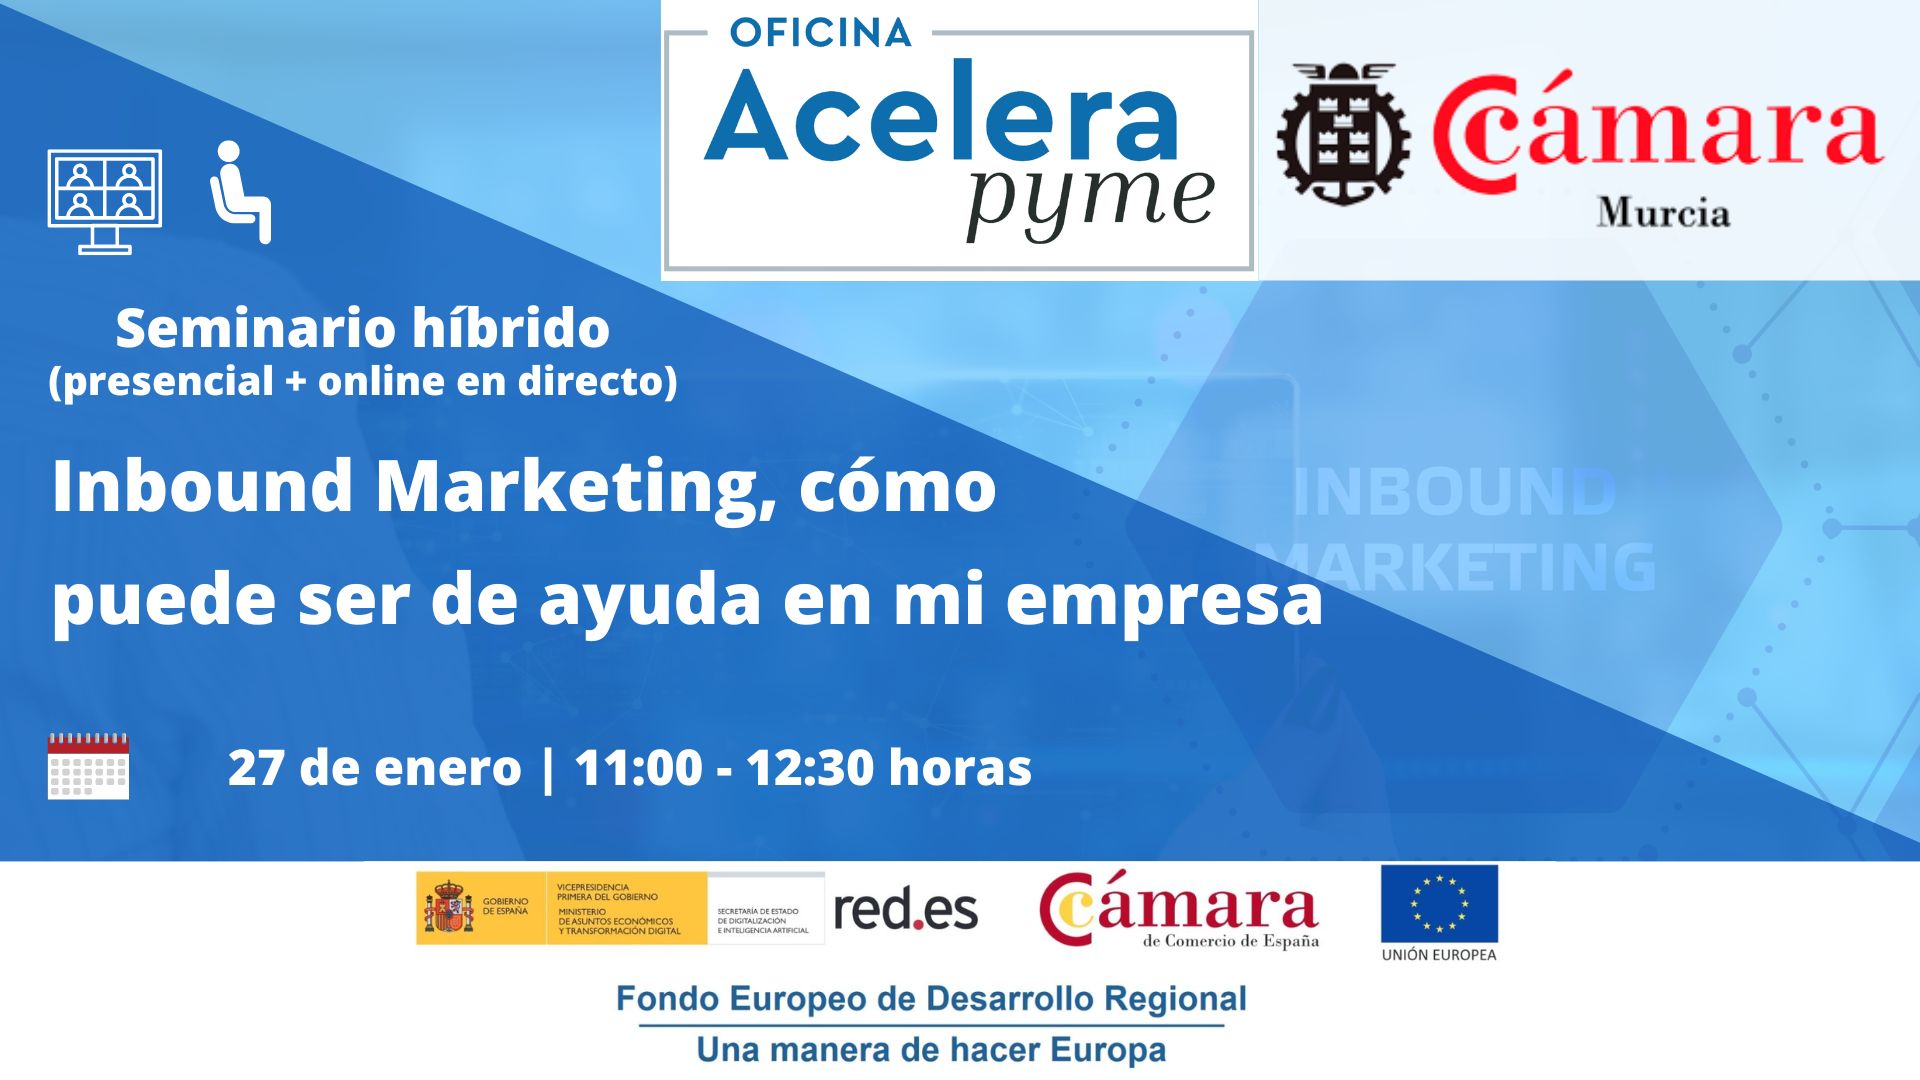 Seminario | Inbound Marketing | Oficina Acelera Pyme | Camara de Comercio de Murcia